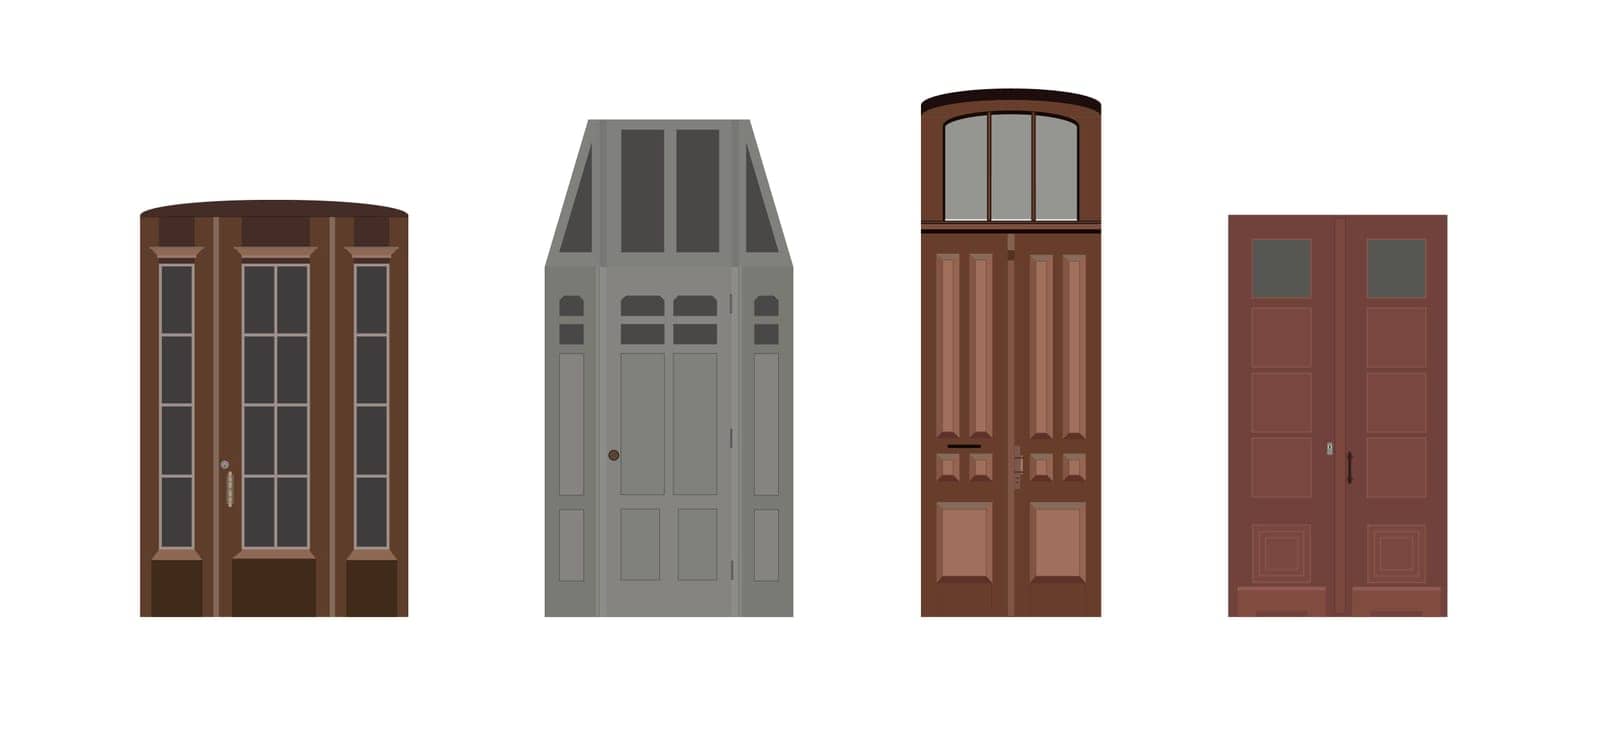 Set of 4 entrance door portal with glass windows. Entry front doorway, european style design. Vector illustration.